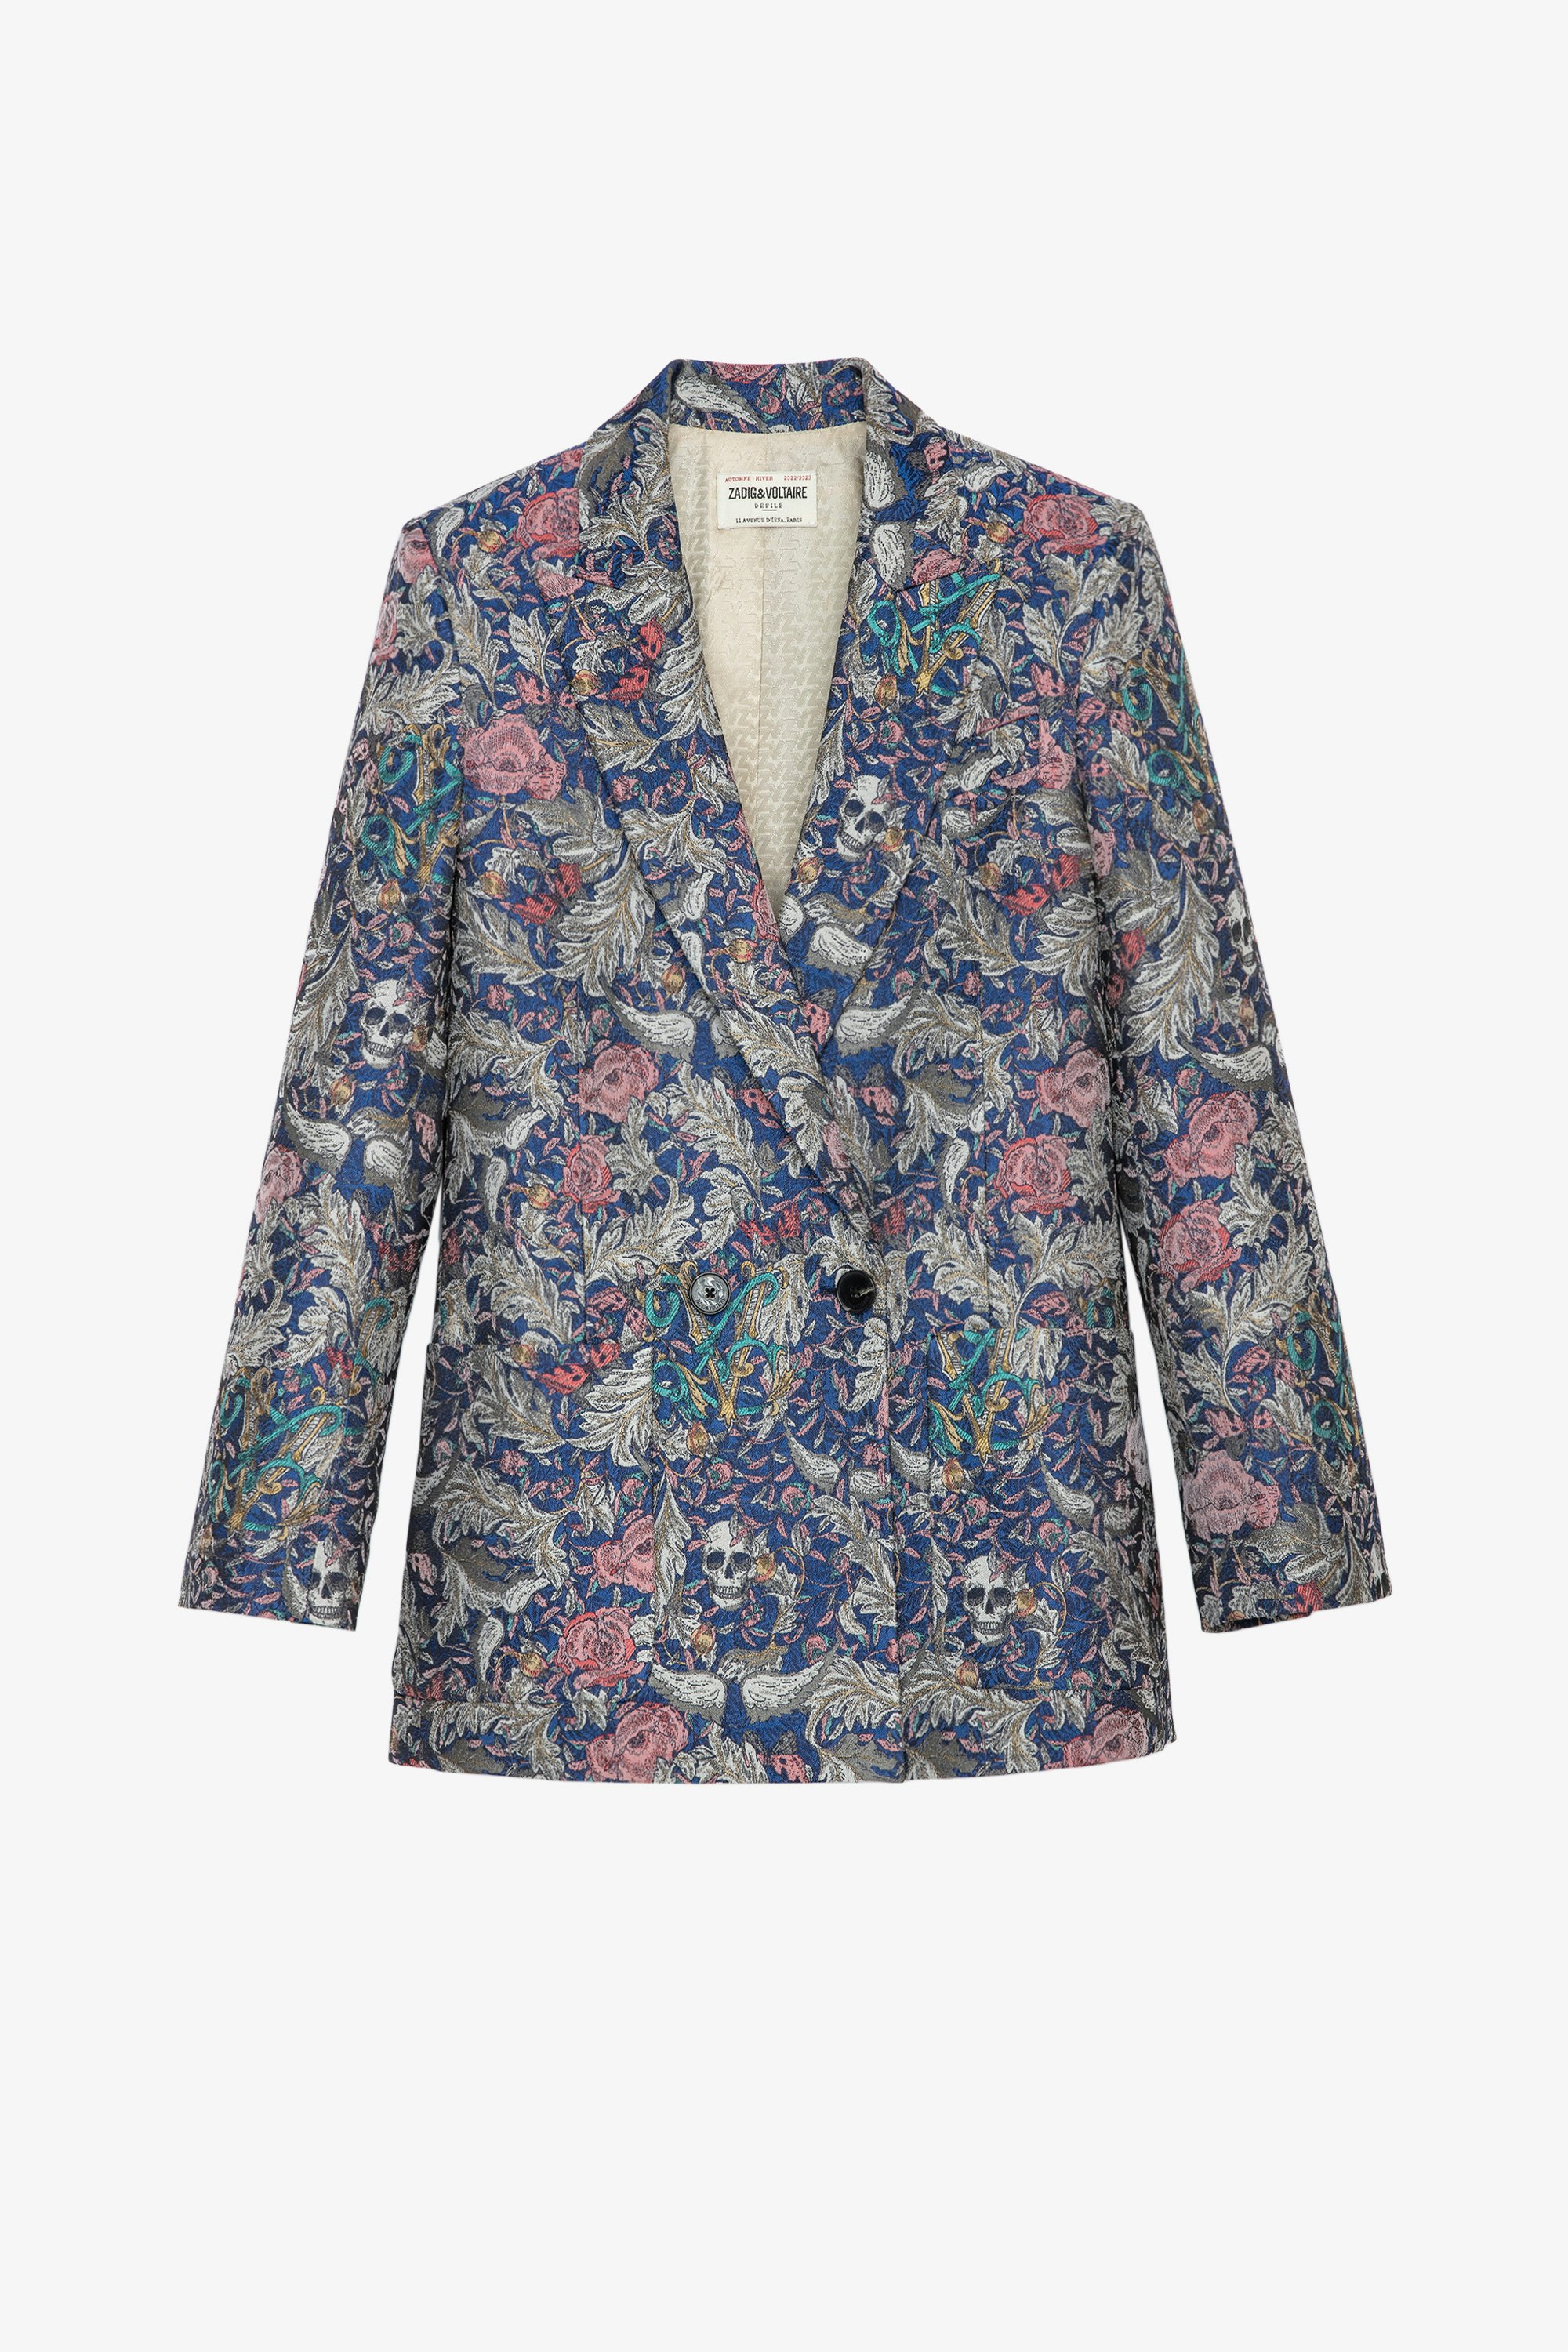 Visko Jac ジャケット Women's blue jacquard jacket with floral motifs 